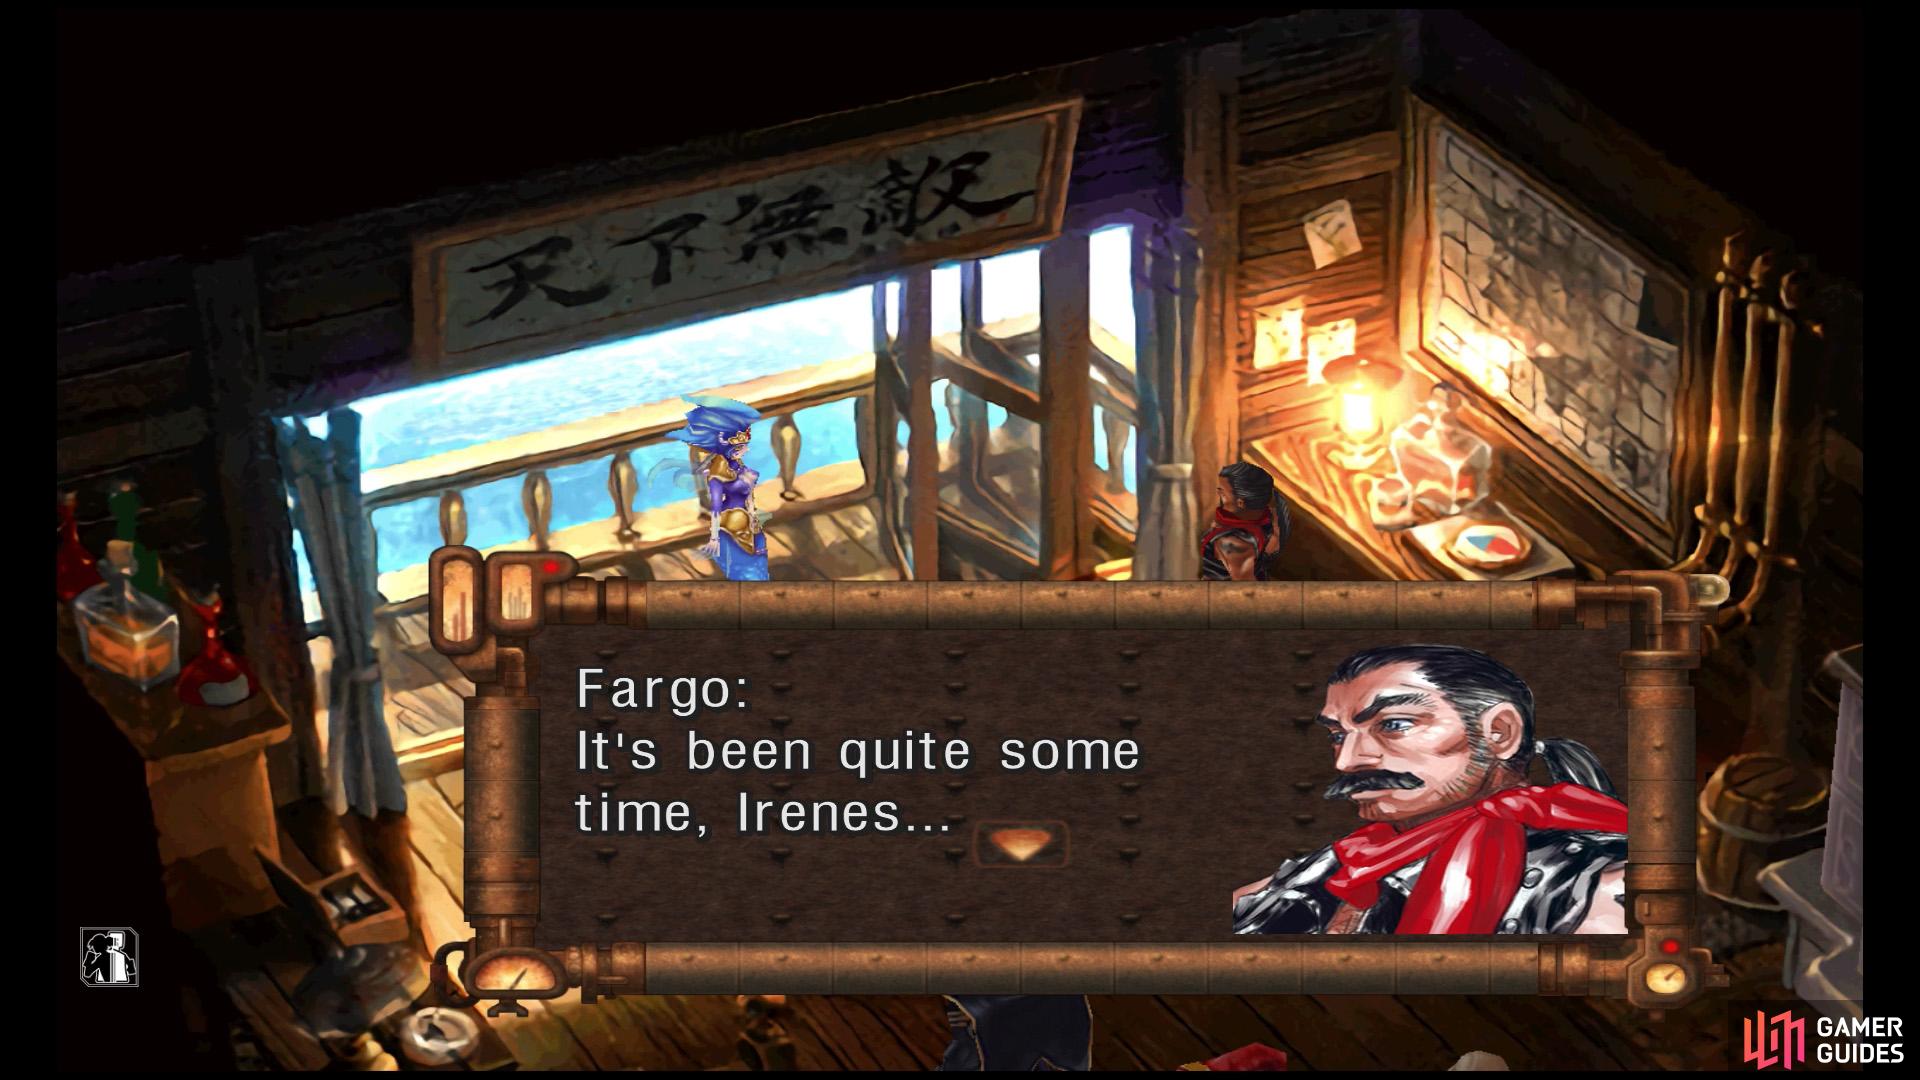 Inside the captain's cabin, Fargo will briefly speak with Irenes.